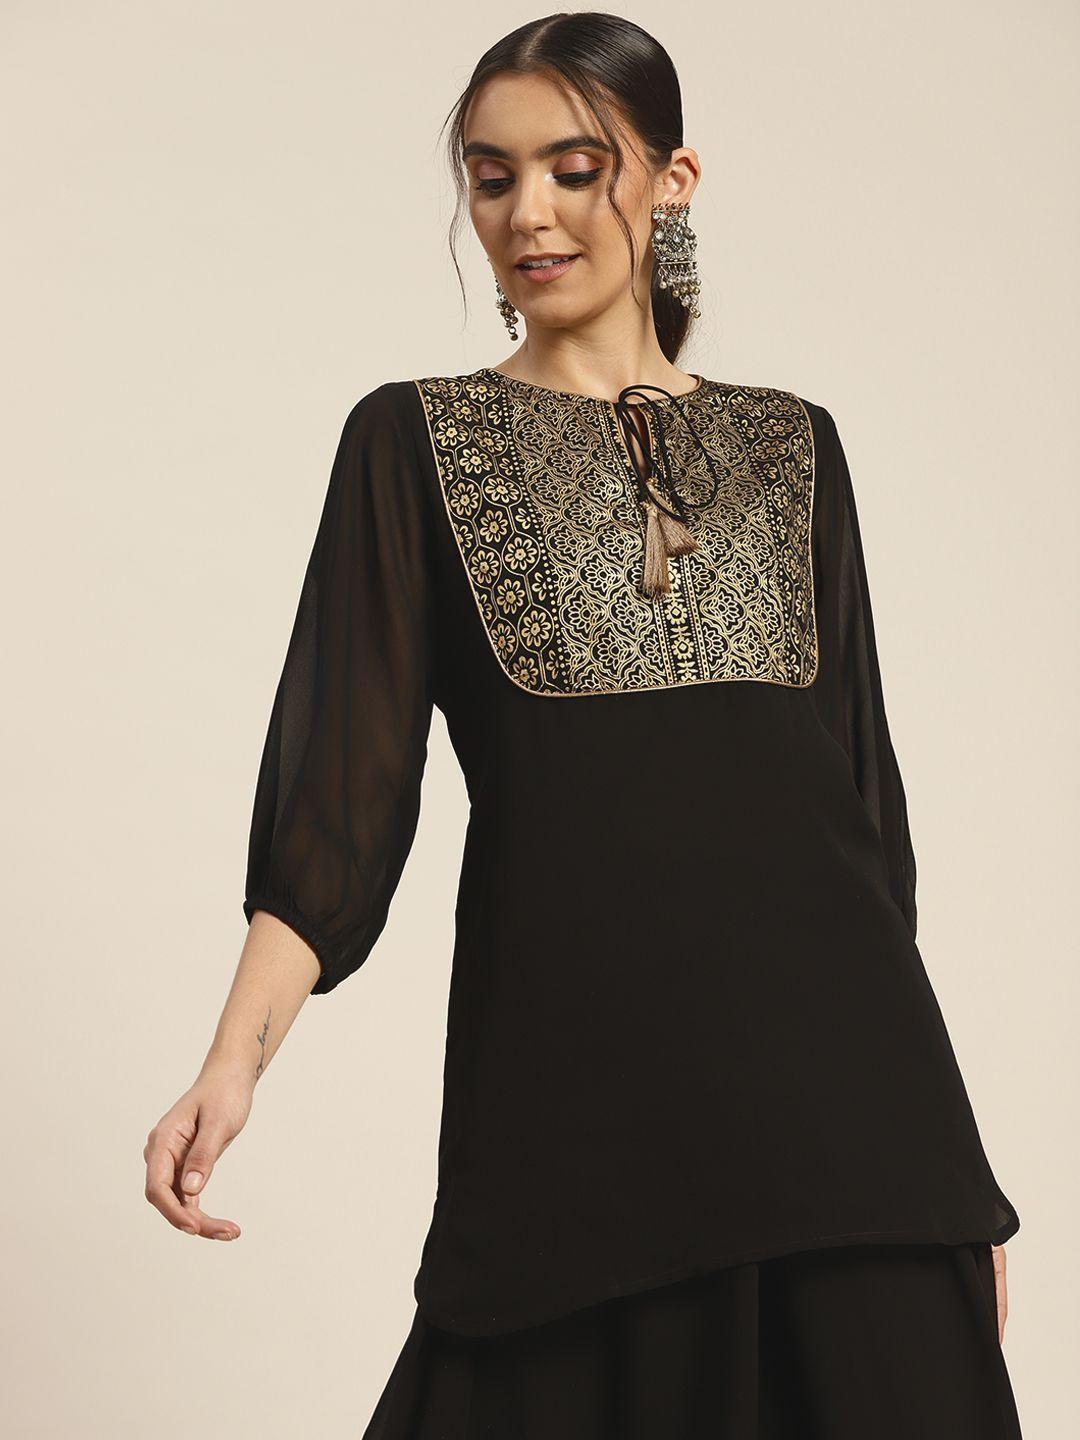 shae by sassafras black & golden ethnic yoke design tunic